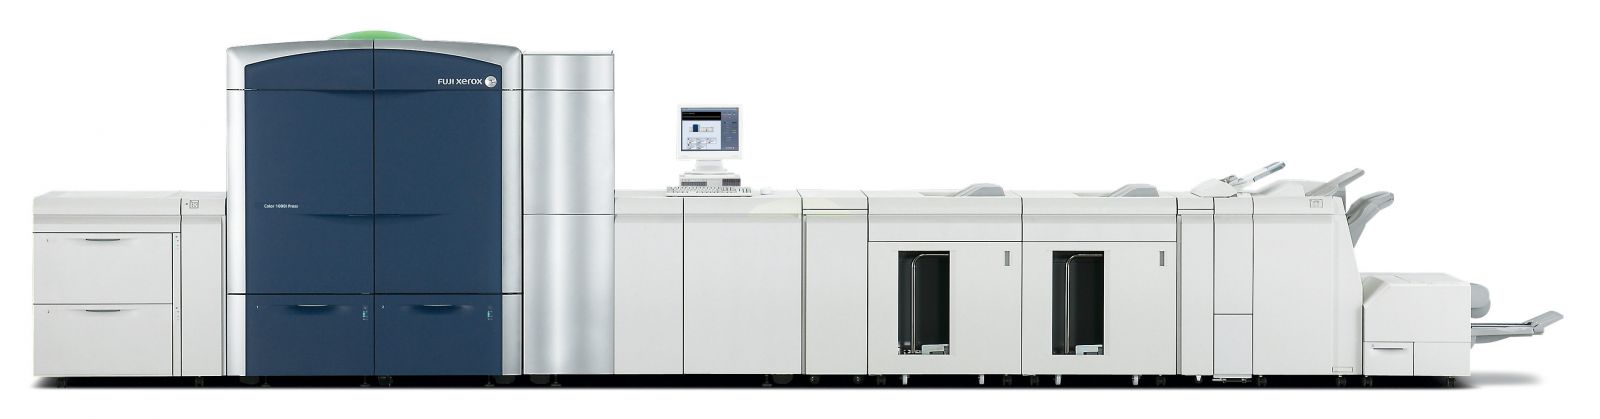 Fuji Xerox Color 1000i Press